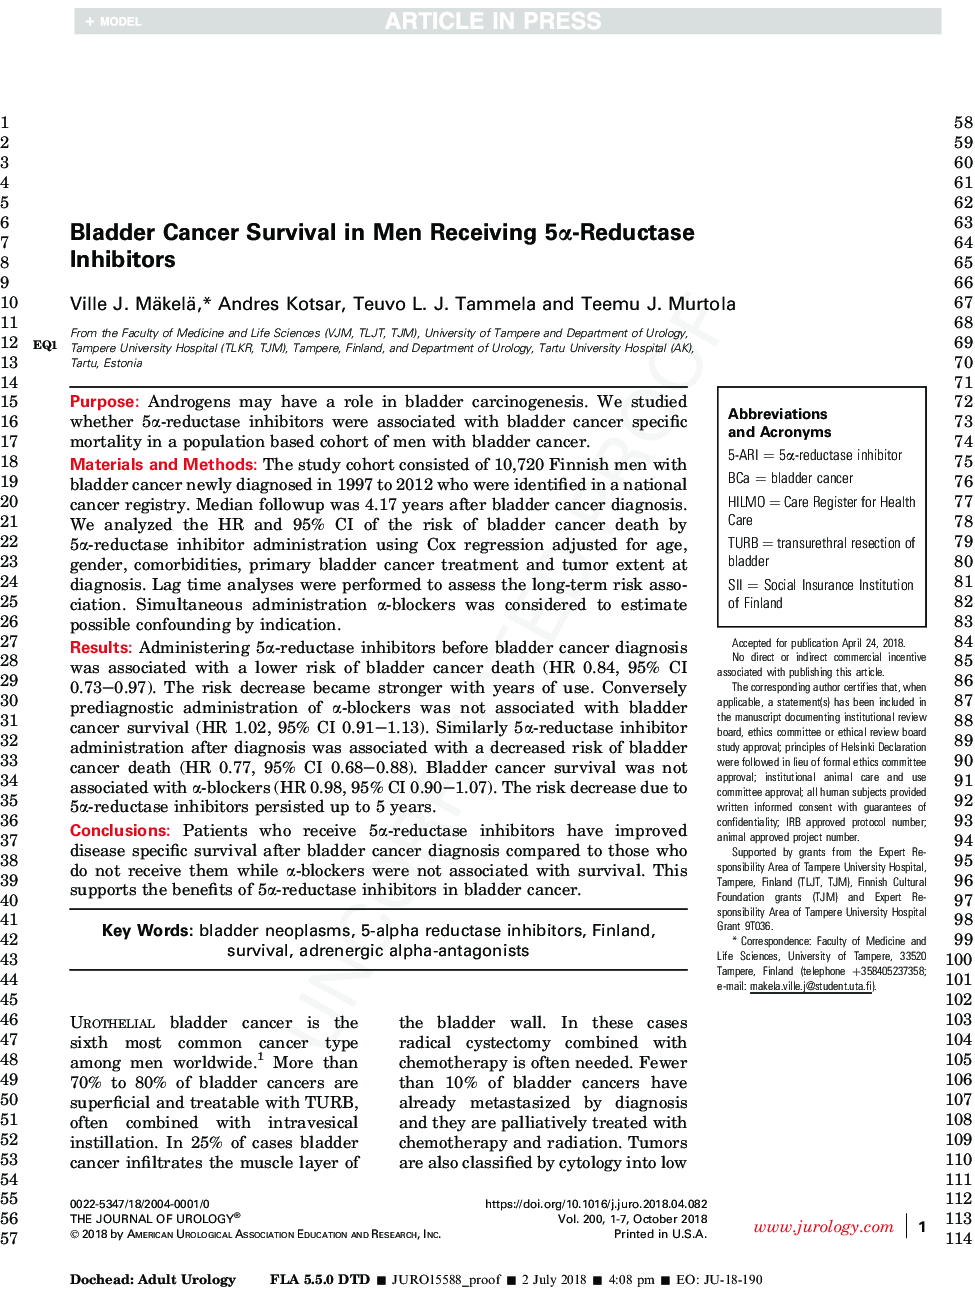 Bladder Cancer Survival of Men Receiving 5Î±-Reductase Inhibitors